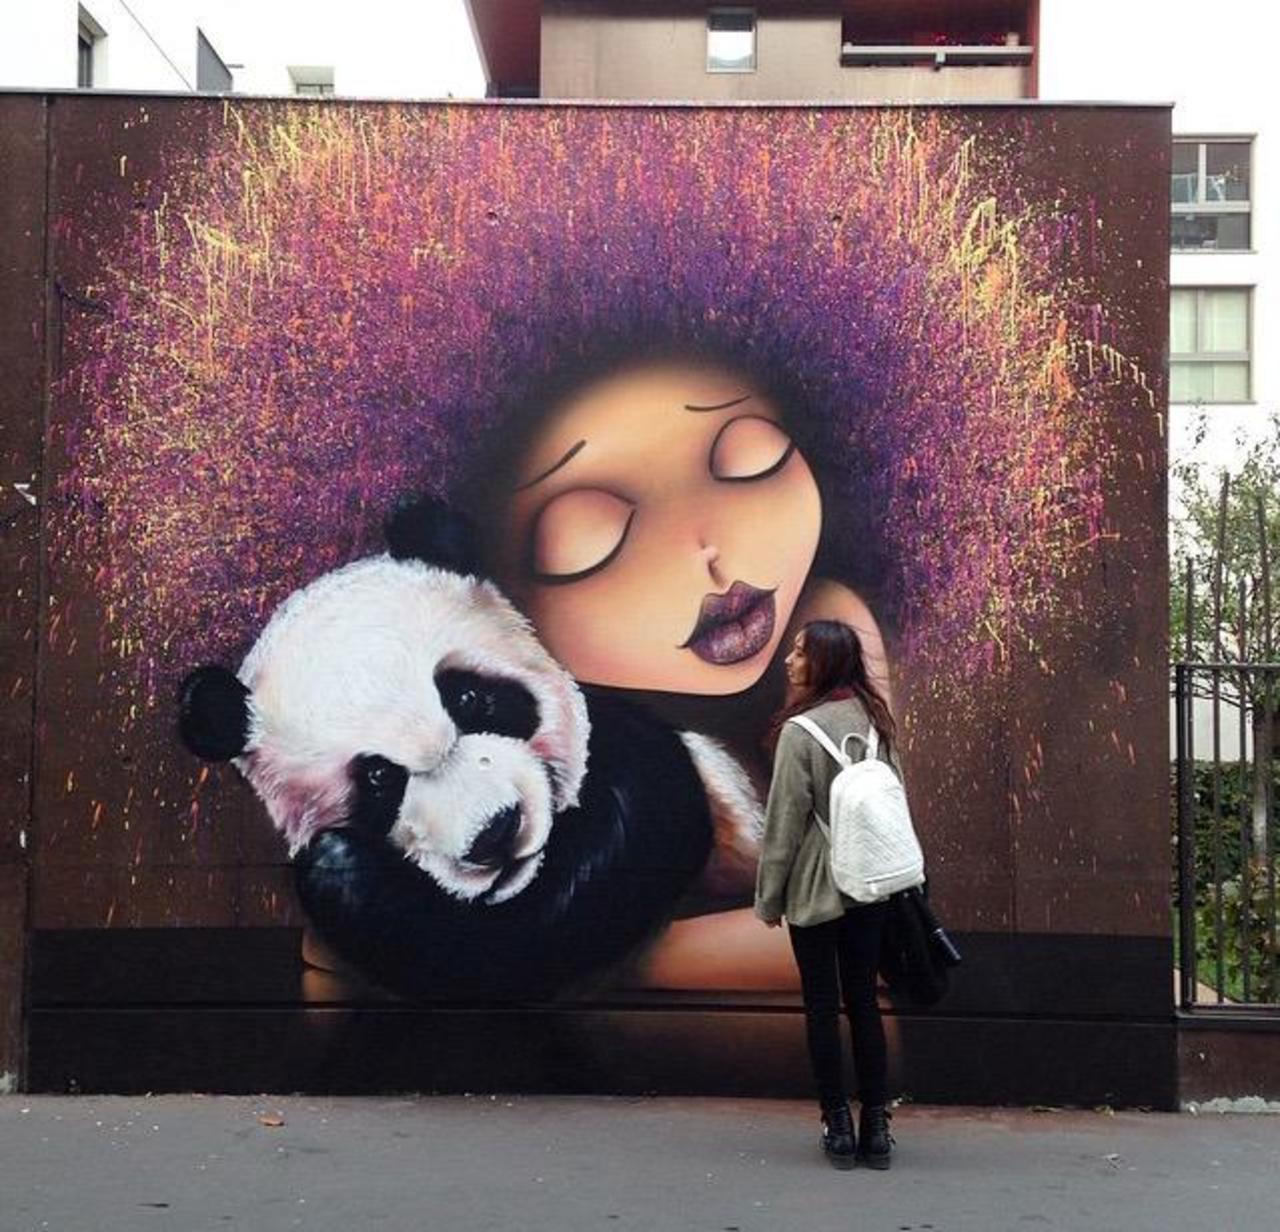 Street Art by VinieGraffiti in Paris 

#art #graffiti #mural #streetart http://t.co/tTwbXFPwV3